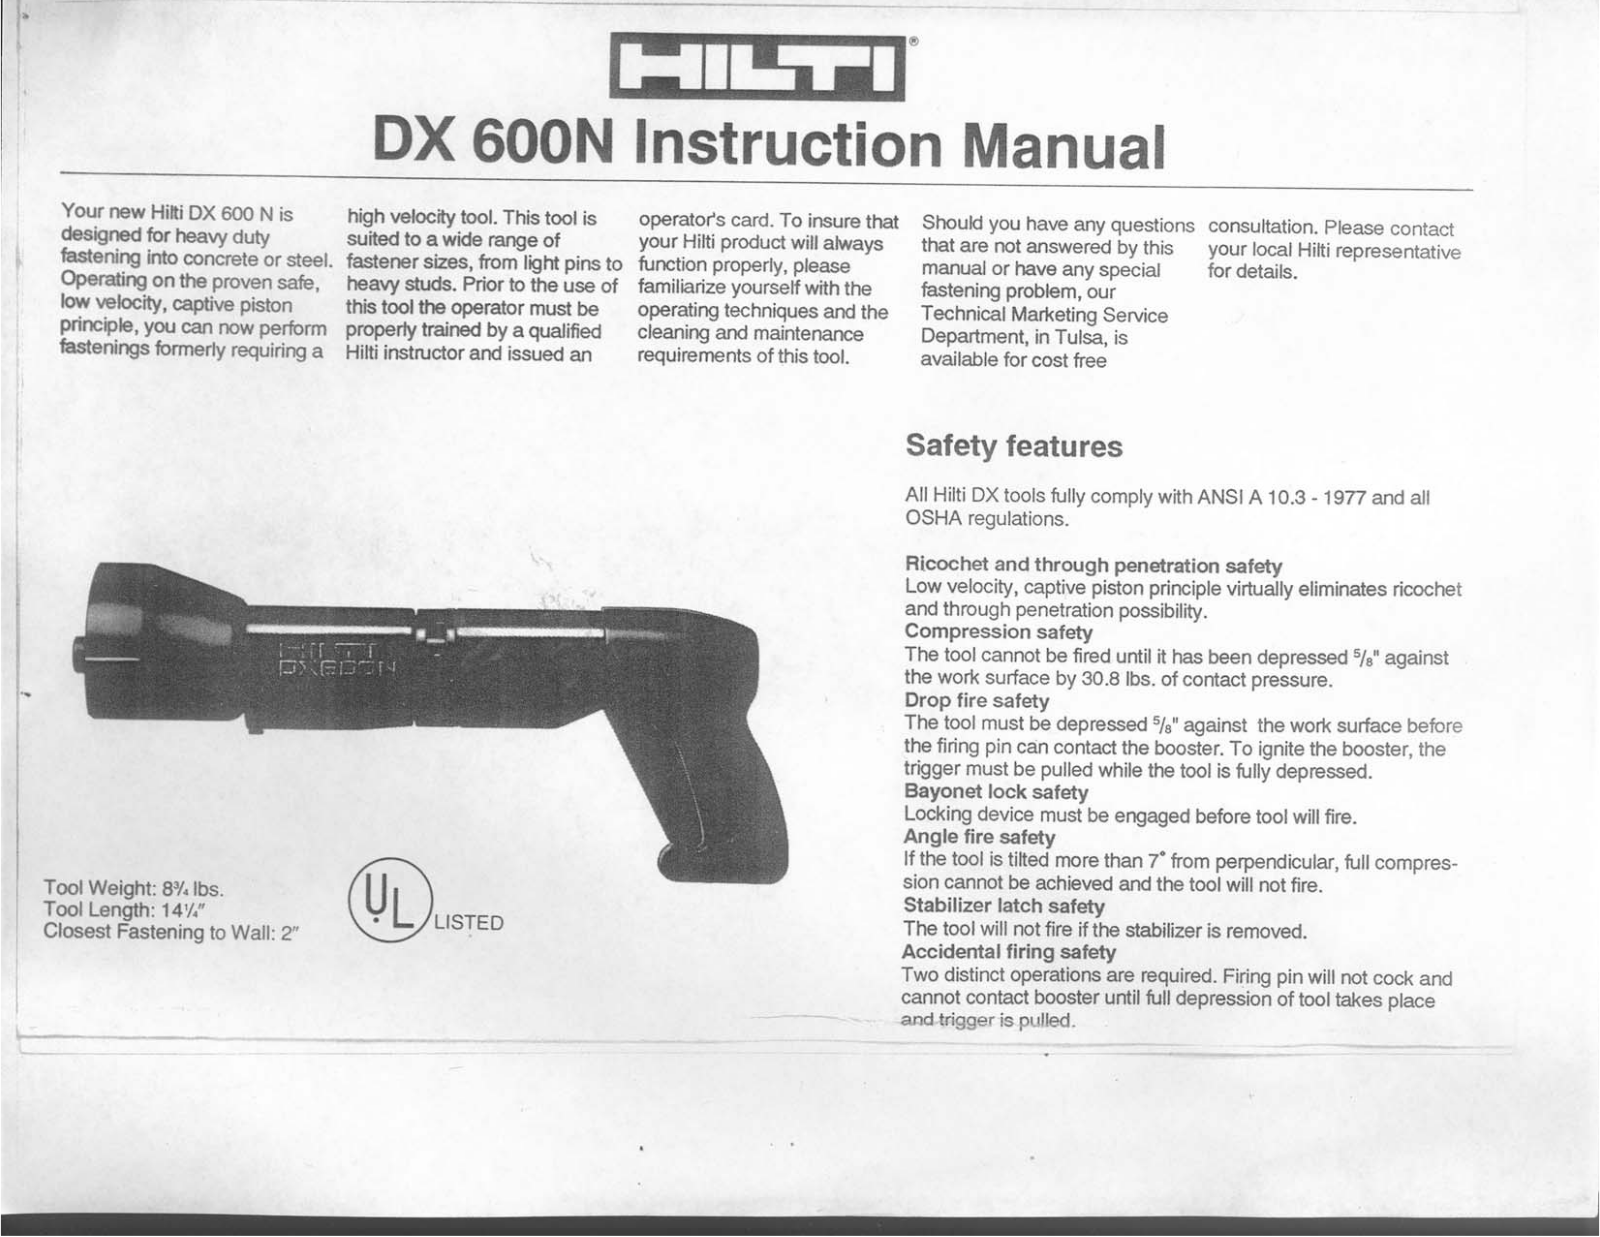 Hilti DX 600N Manual